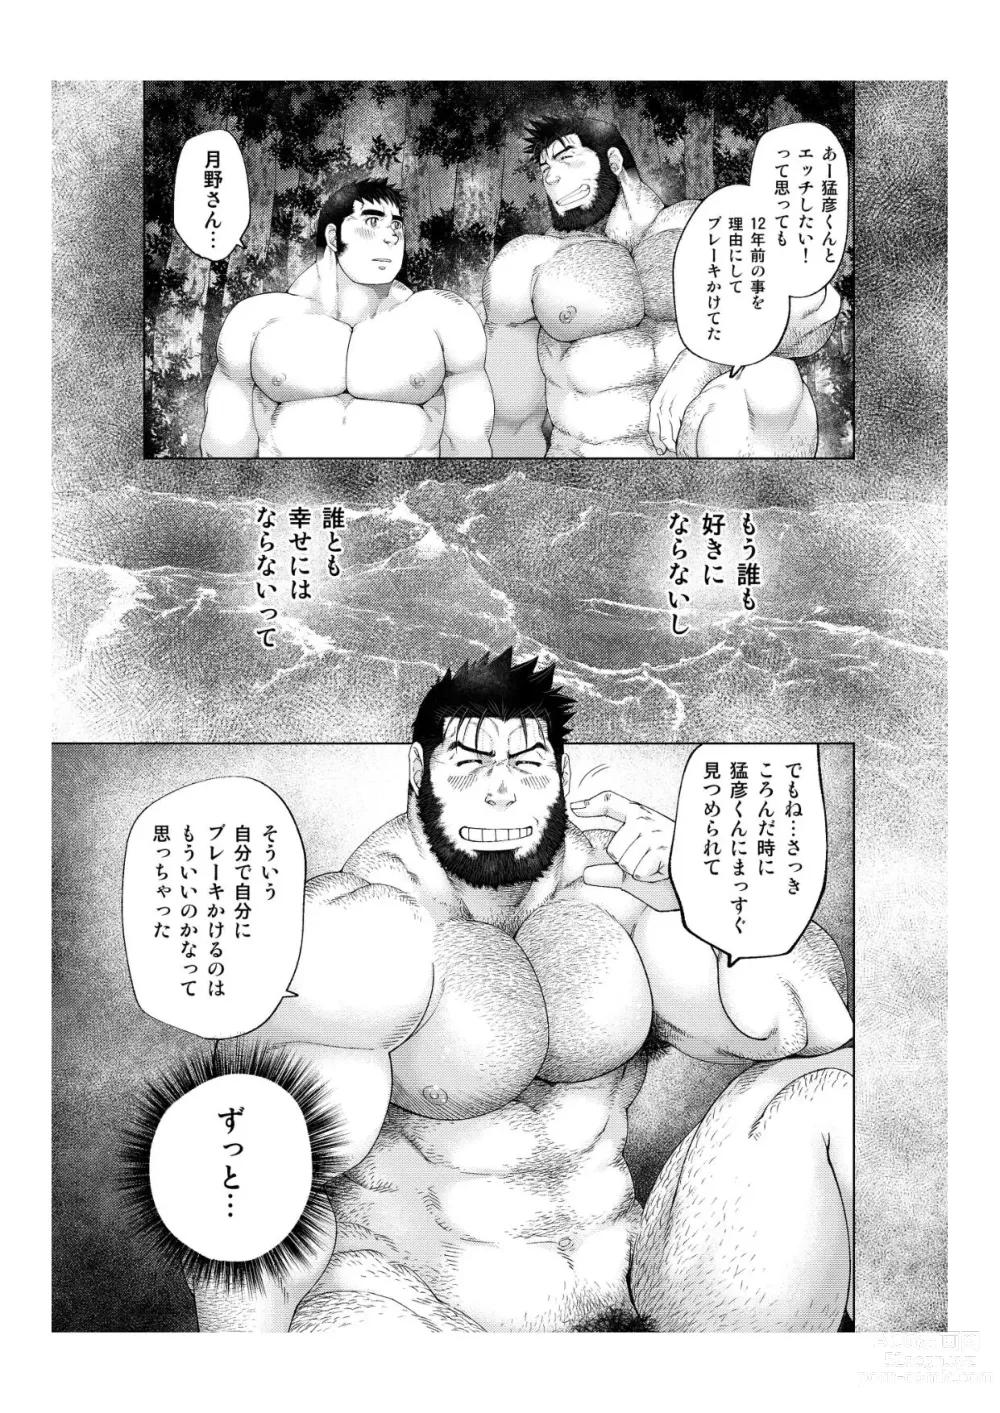 Page 52 of doujinshi Tsukinowaguma